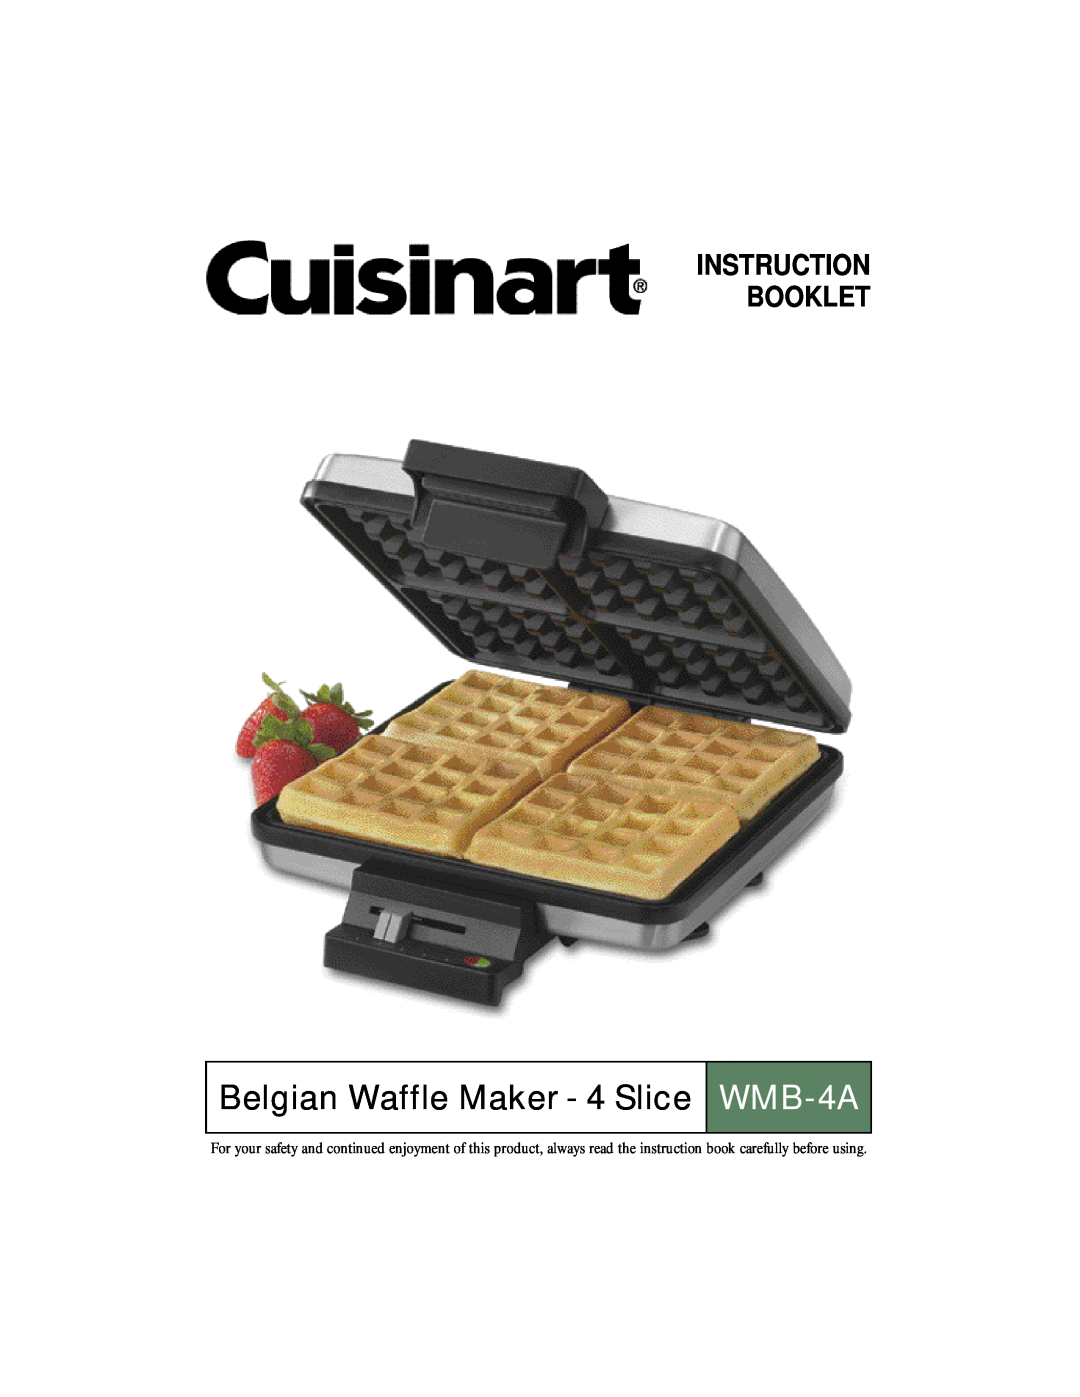 Cuisinart manual Belgian Waffle Maker - 4 Slice WMB-4A, Instruction Booklet 